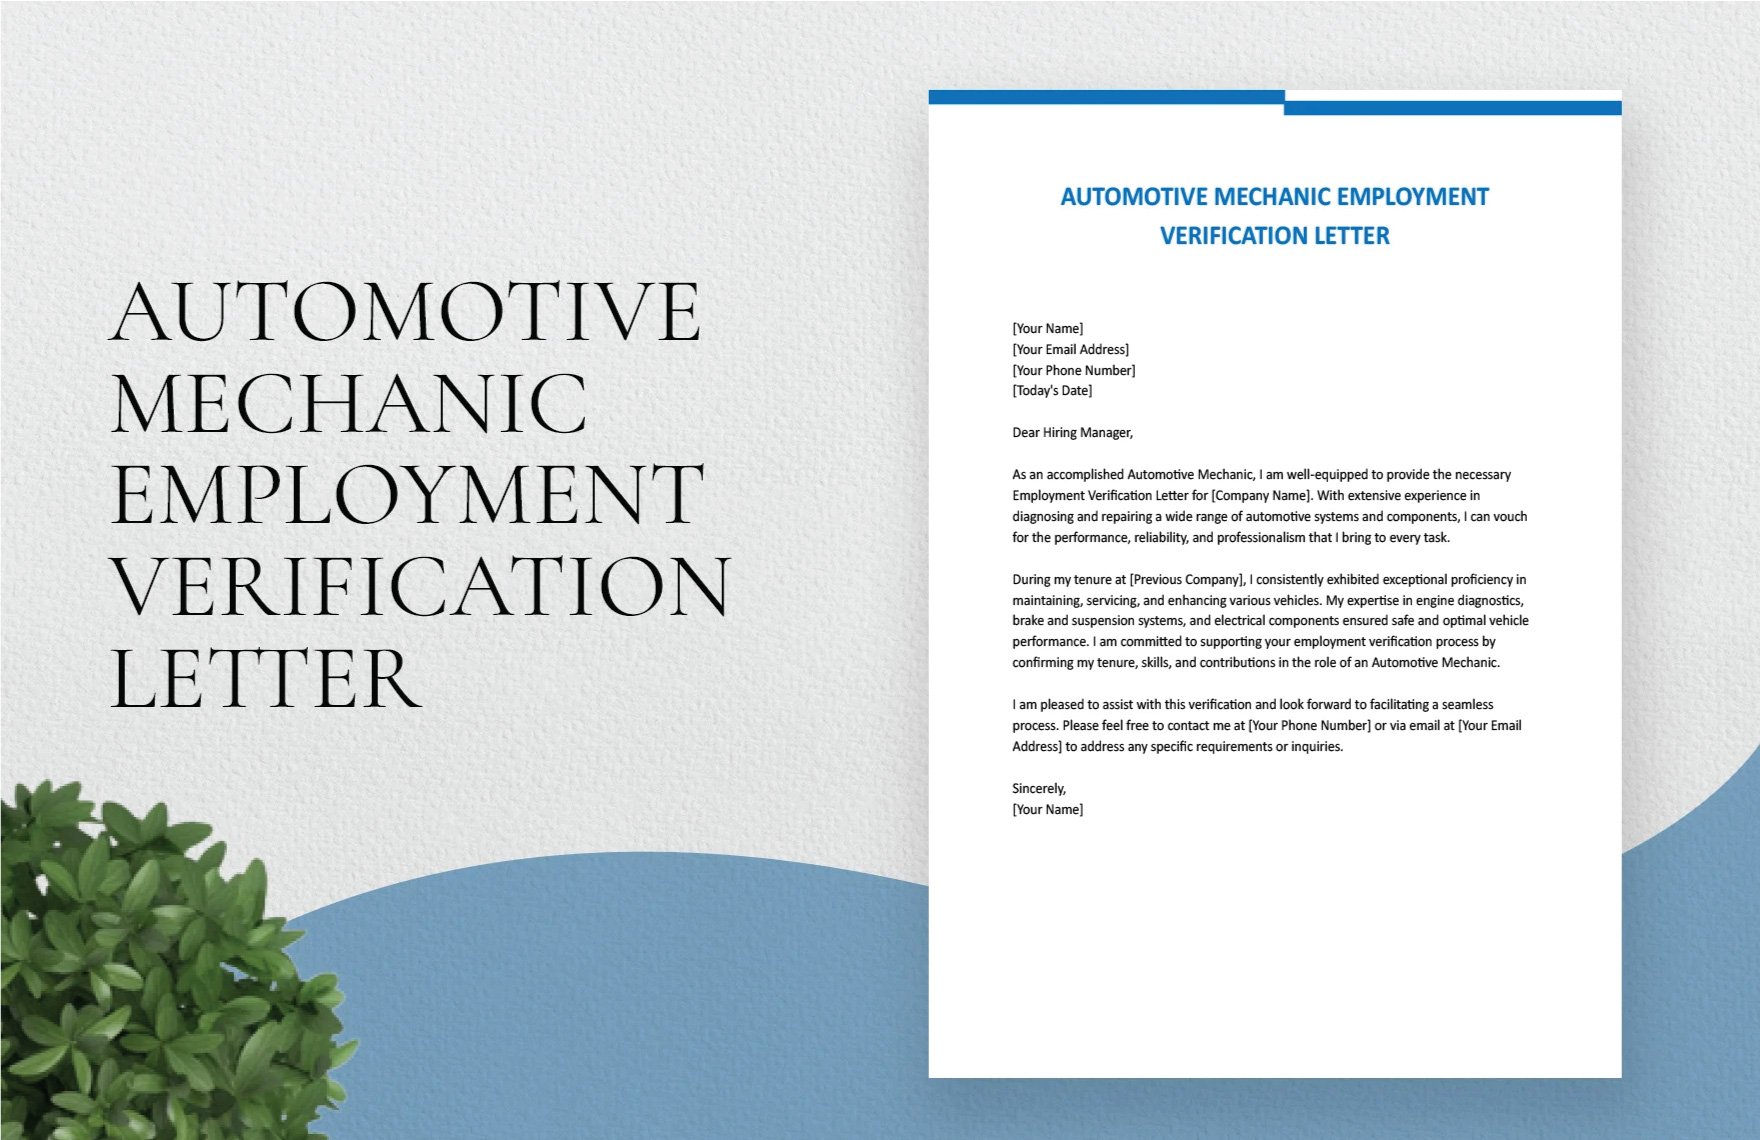 Free Automotive Mechanic Employment Verification Letter in Word, Google Docs